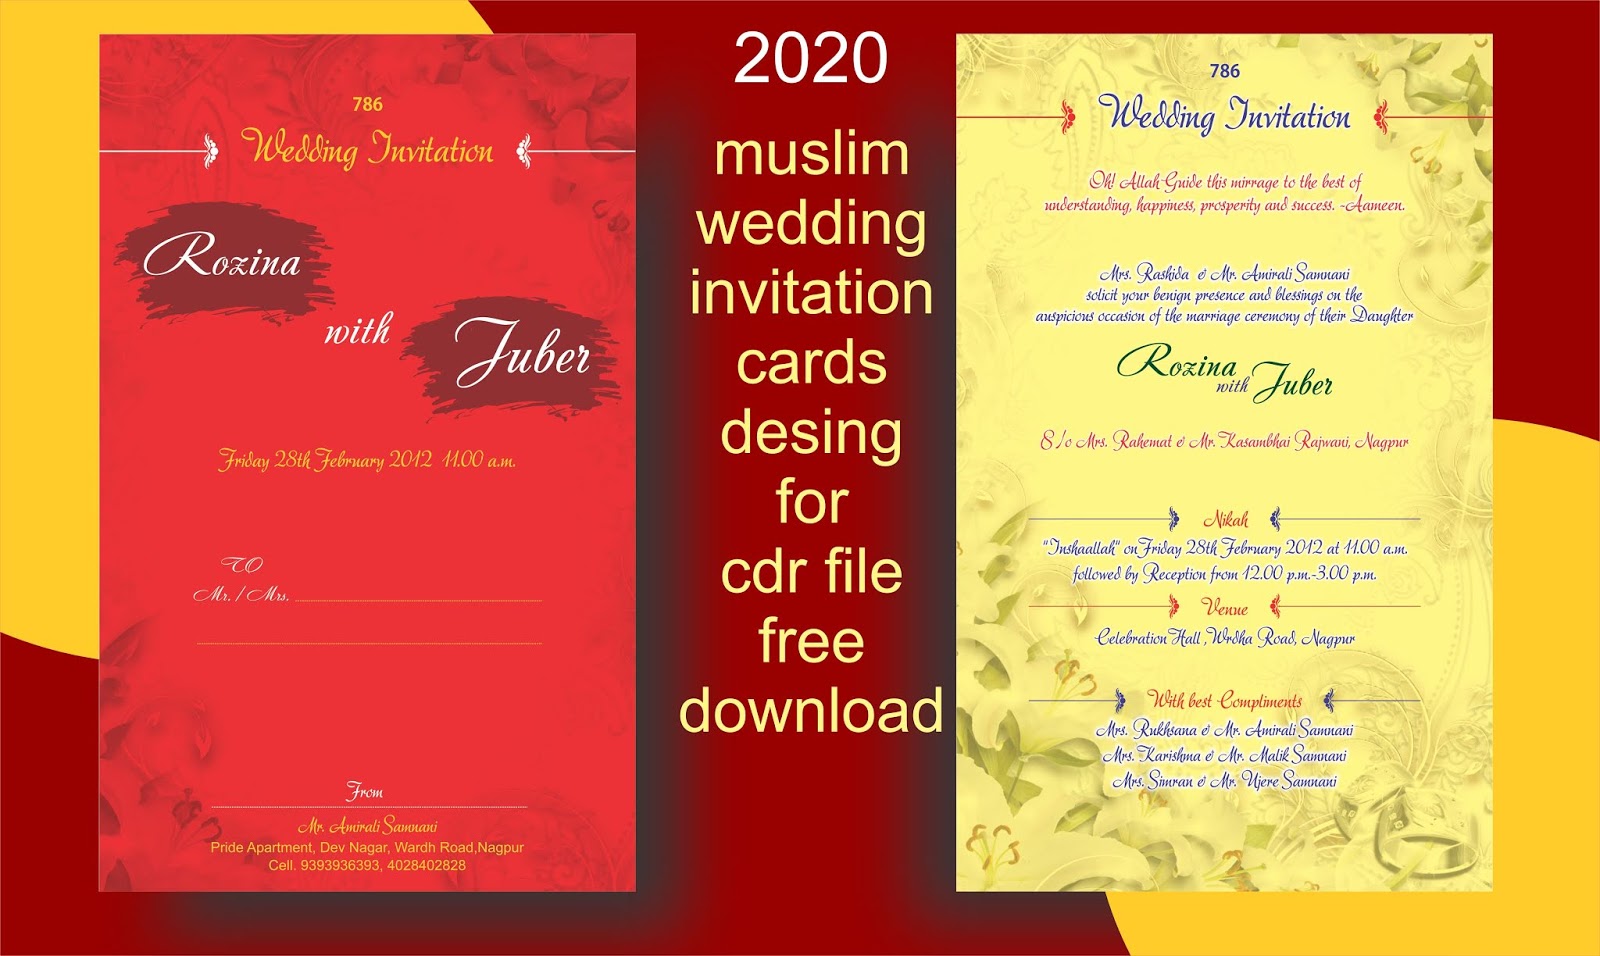 Muslim Wedding Invitation Cards Matter Ar Graphics Free Cdr Psd Websites For Graphic Design